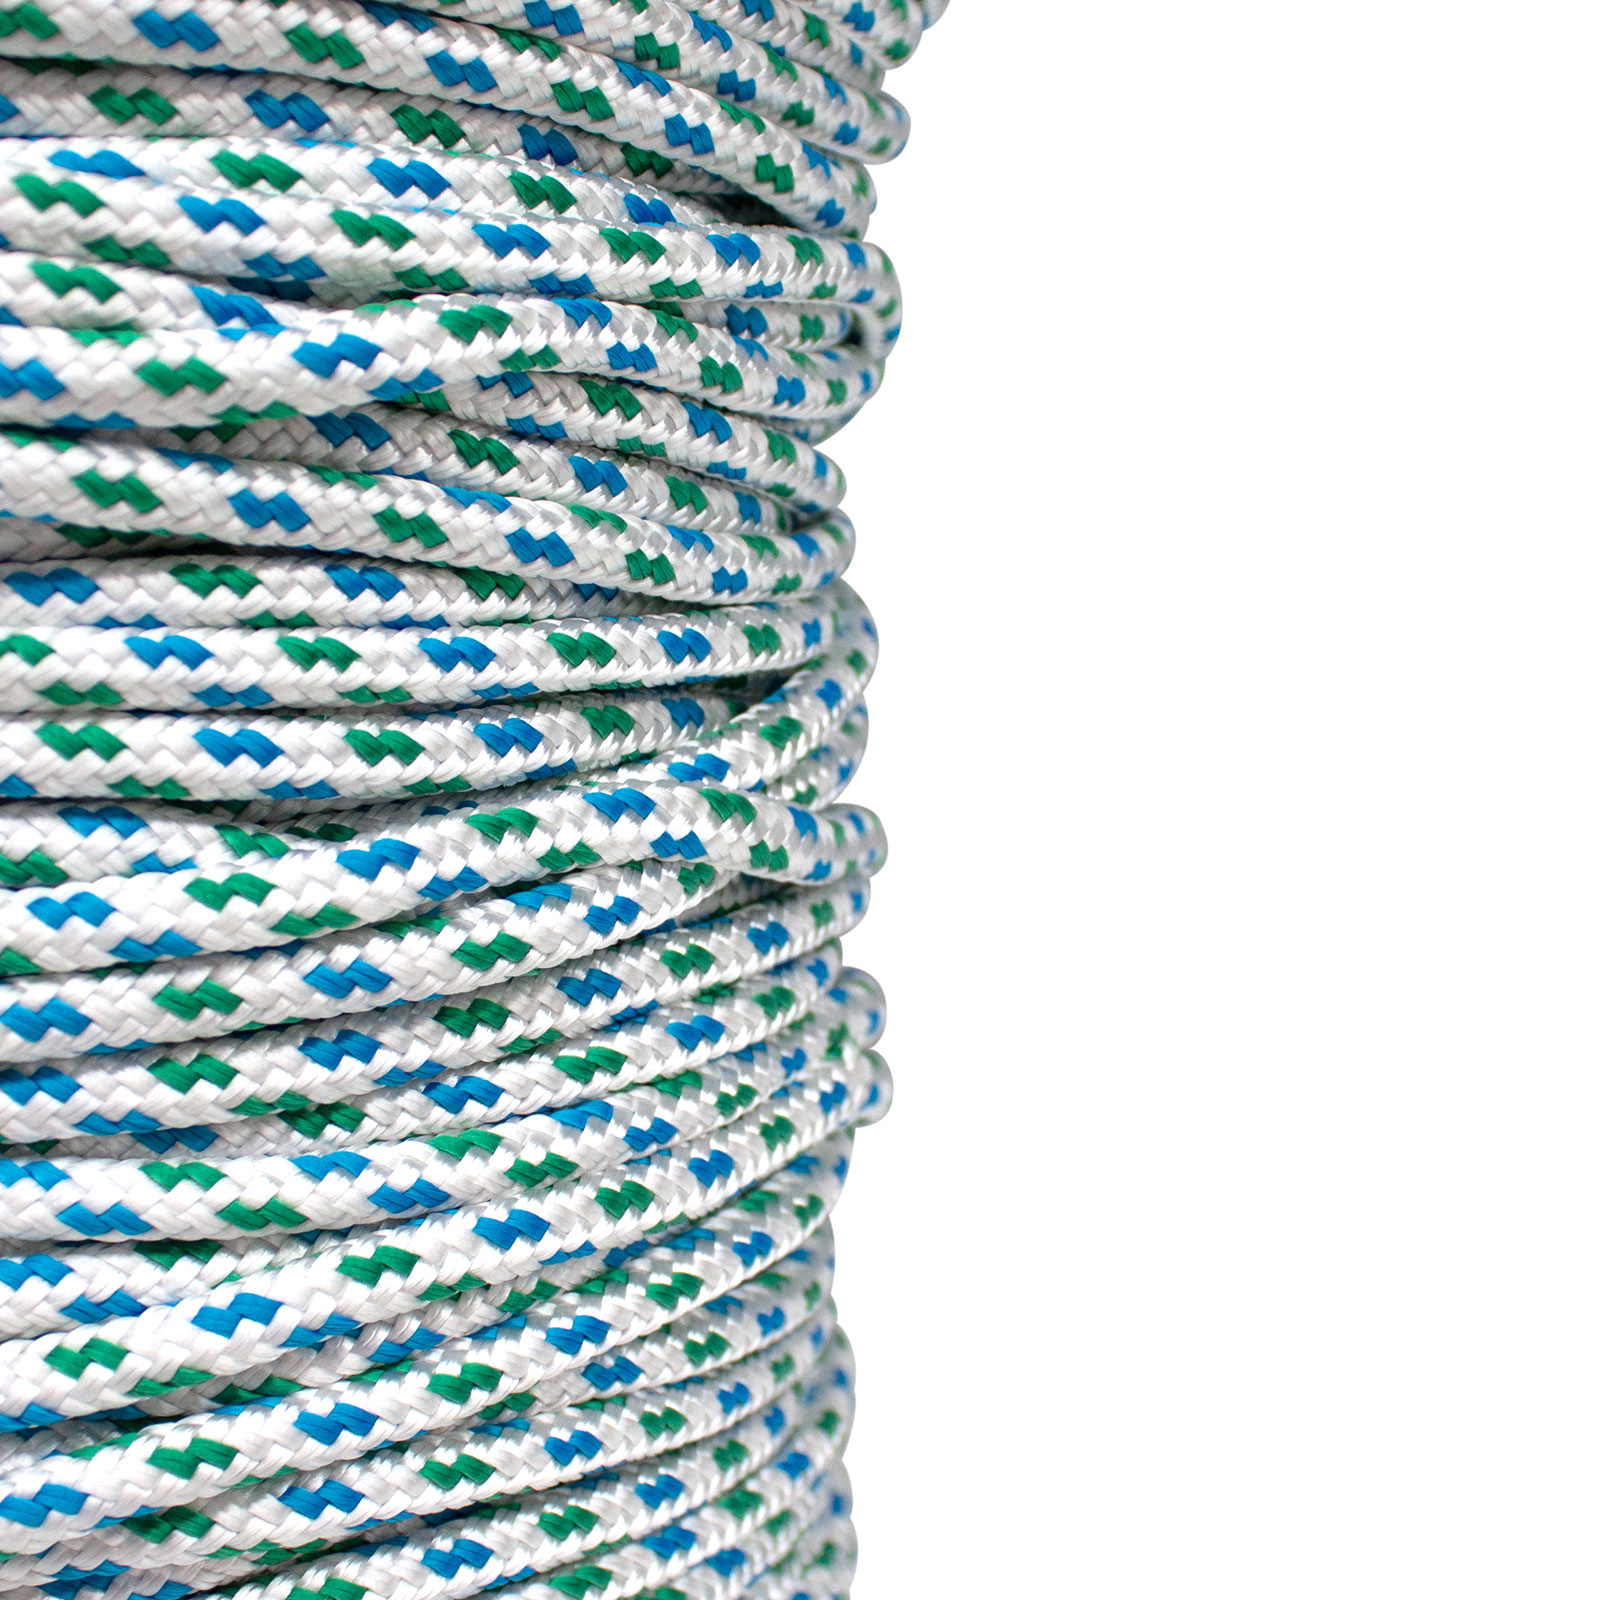 Savwinch Rope and Chain Closeup